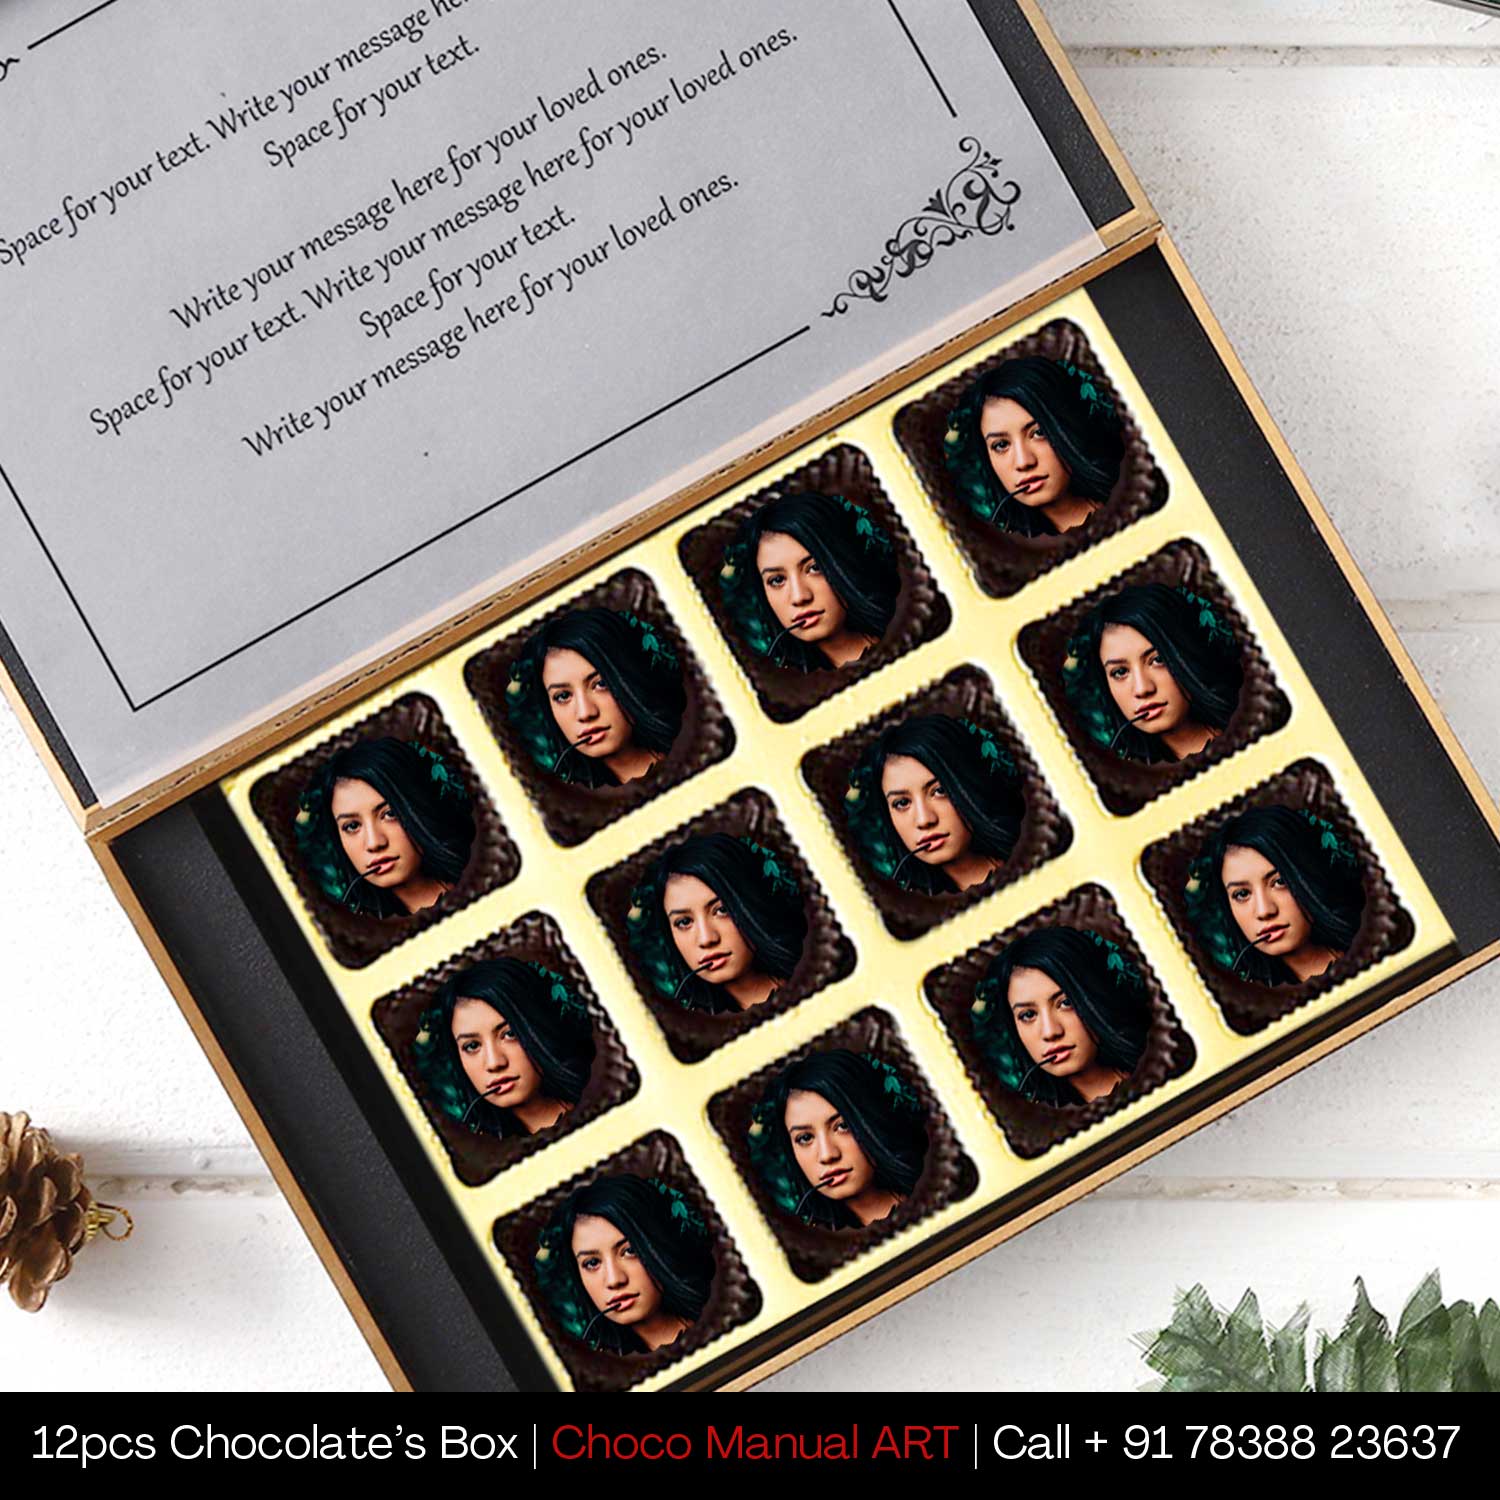 Customized Chocolates with Photo Printed on Chocolate